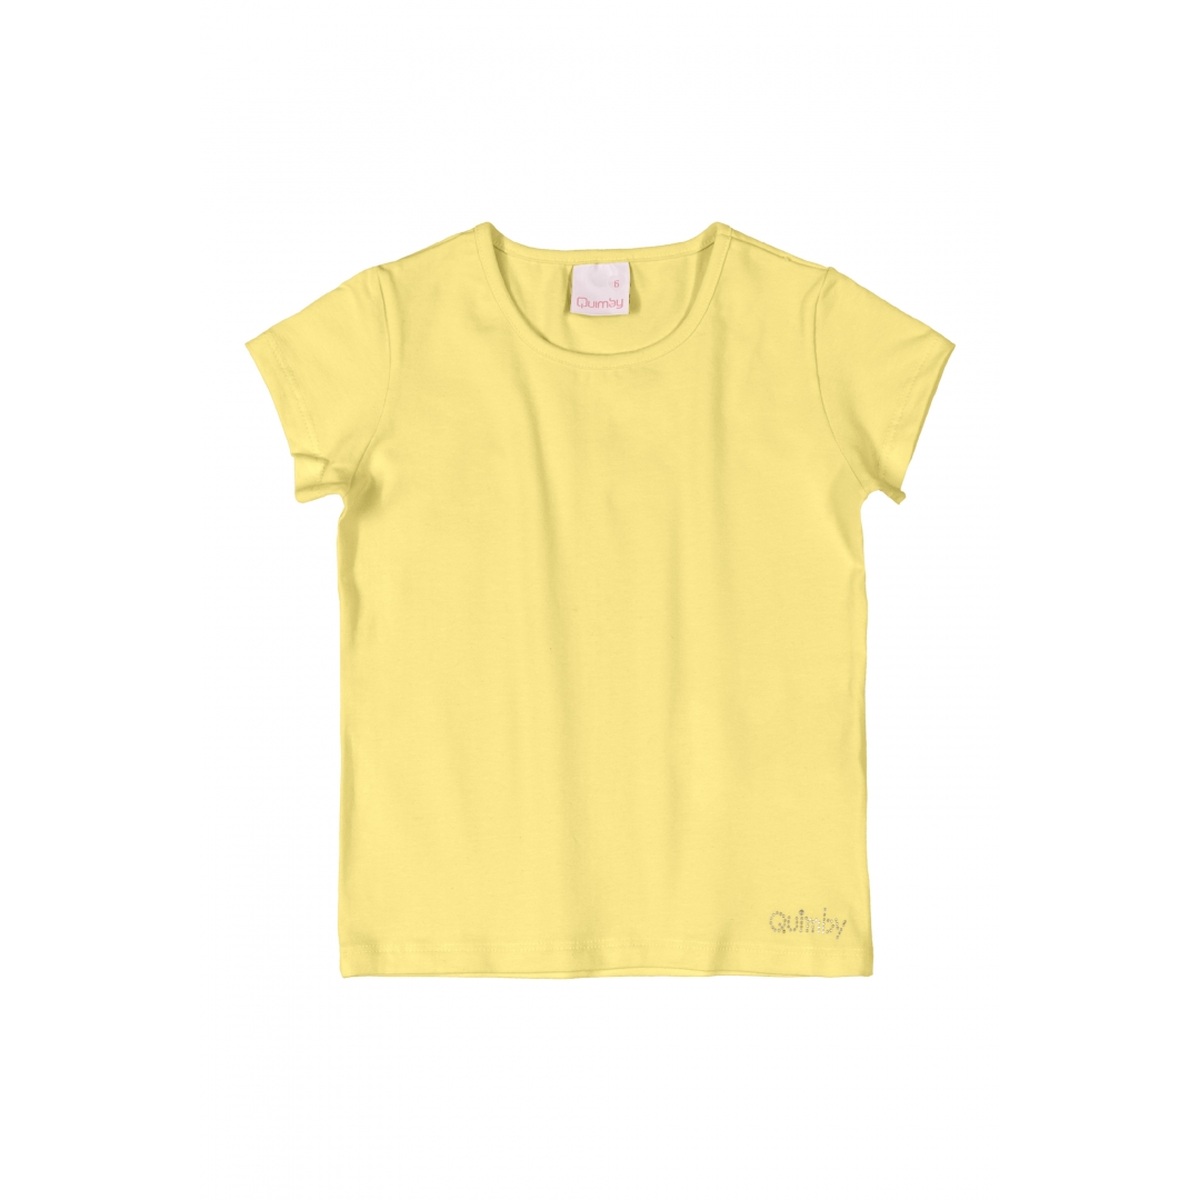 Camiseta Menina Quimby em Cotton - Amarelo